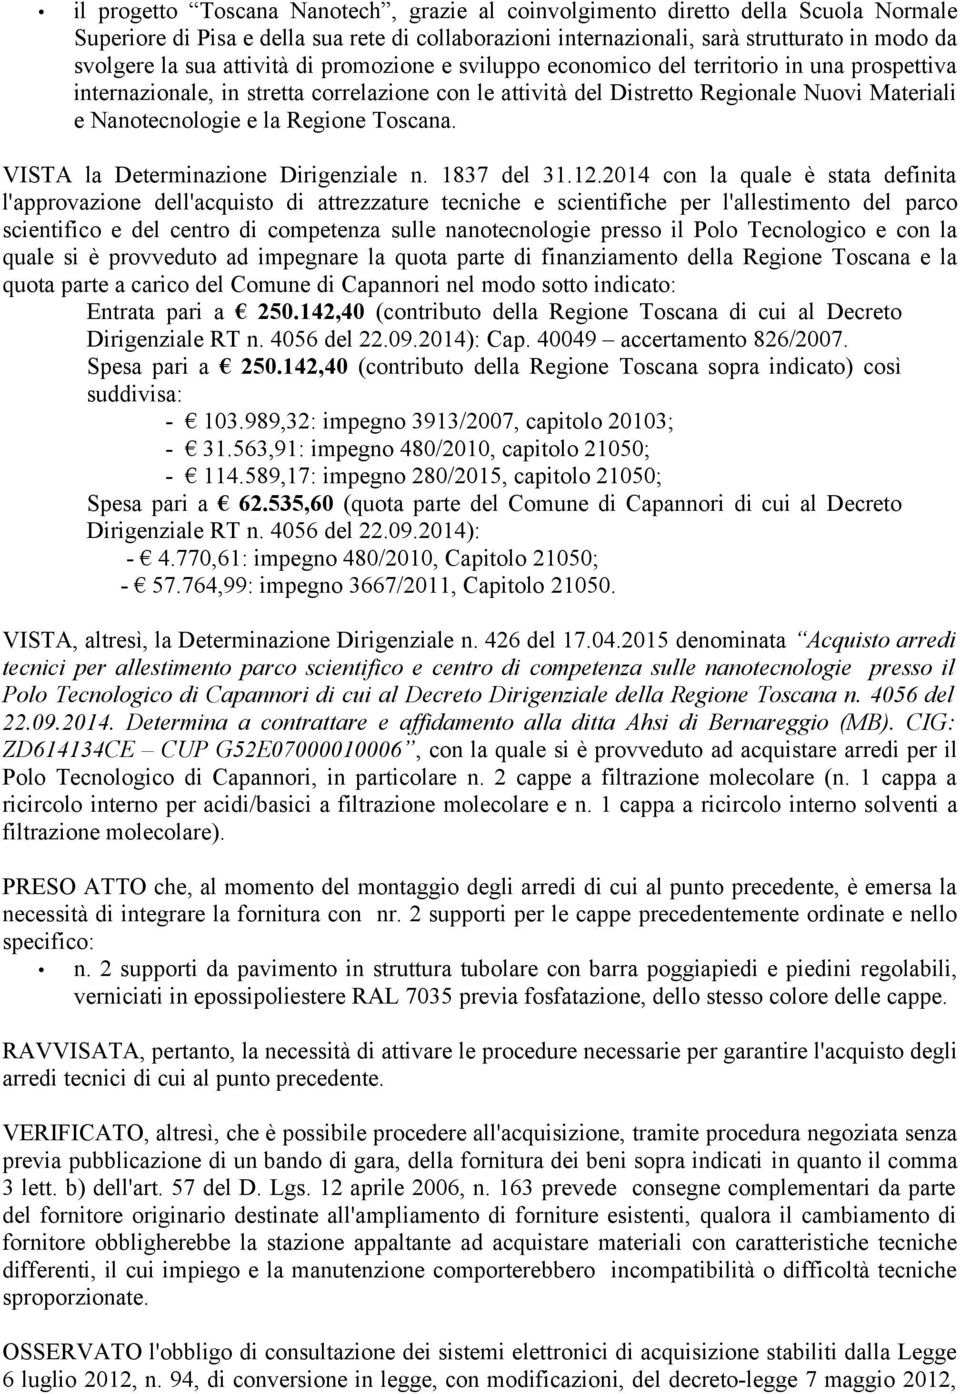 Regione Toscana. VISTA la Determinazione Dirigenziale n. 1837 del 31.12.